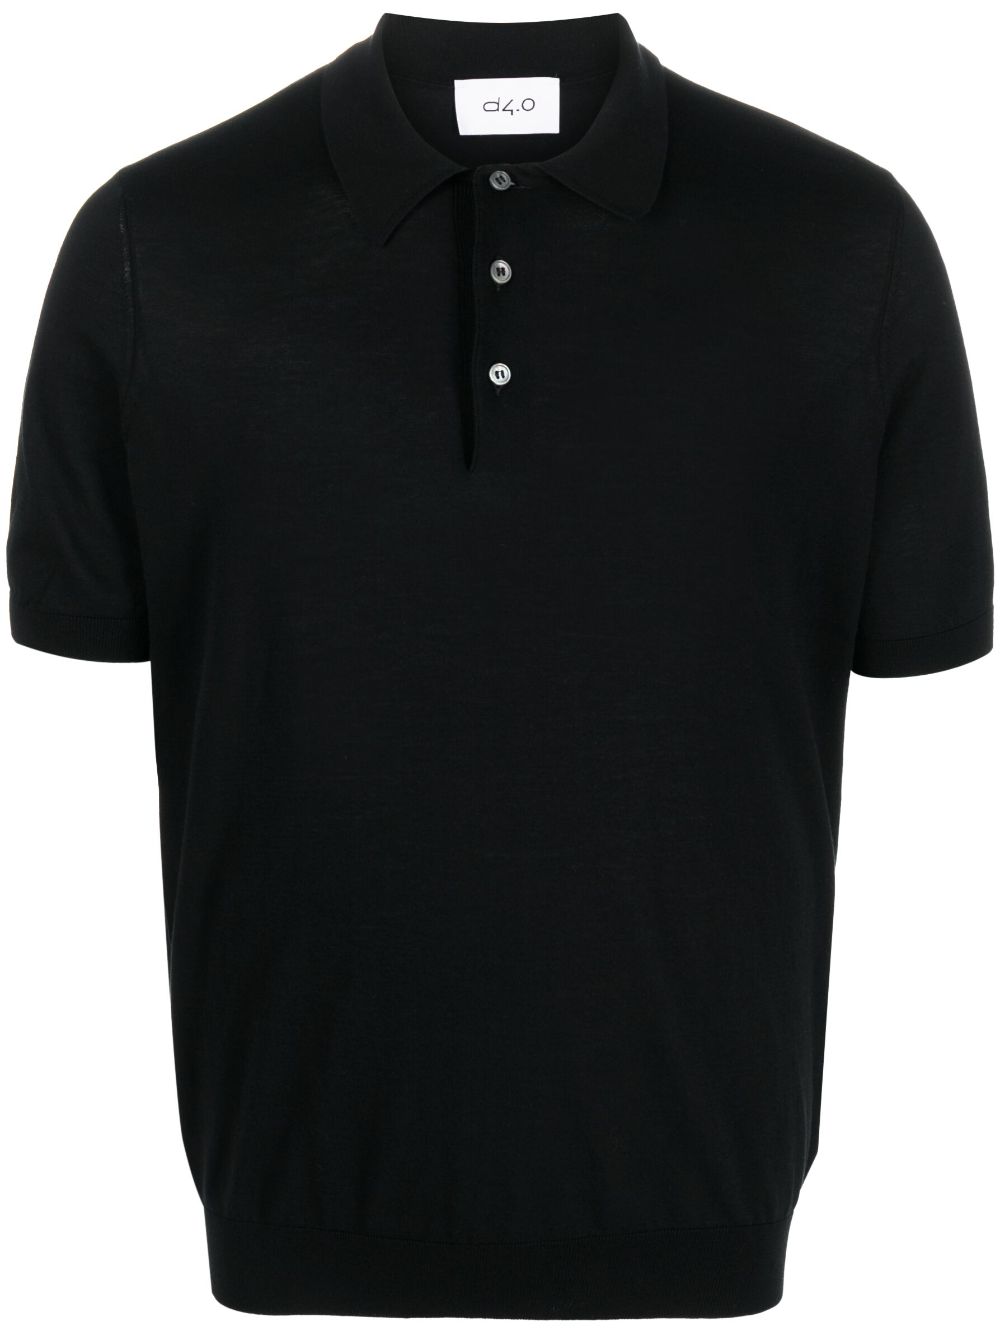 D4.0 short-sleeve cotton polo shirt